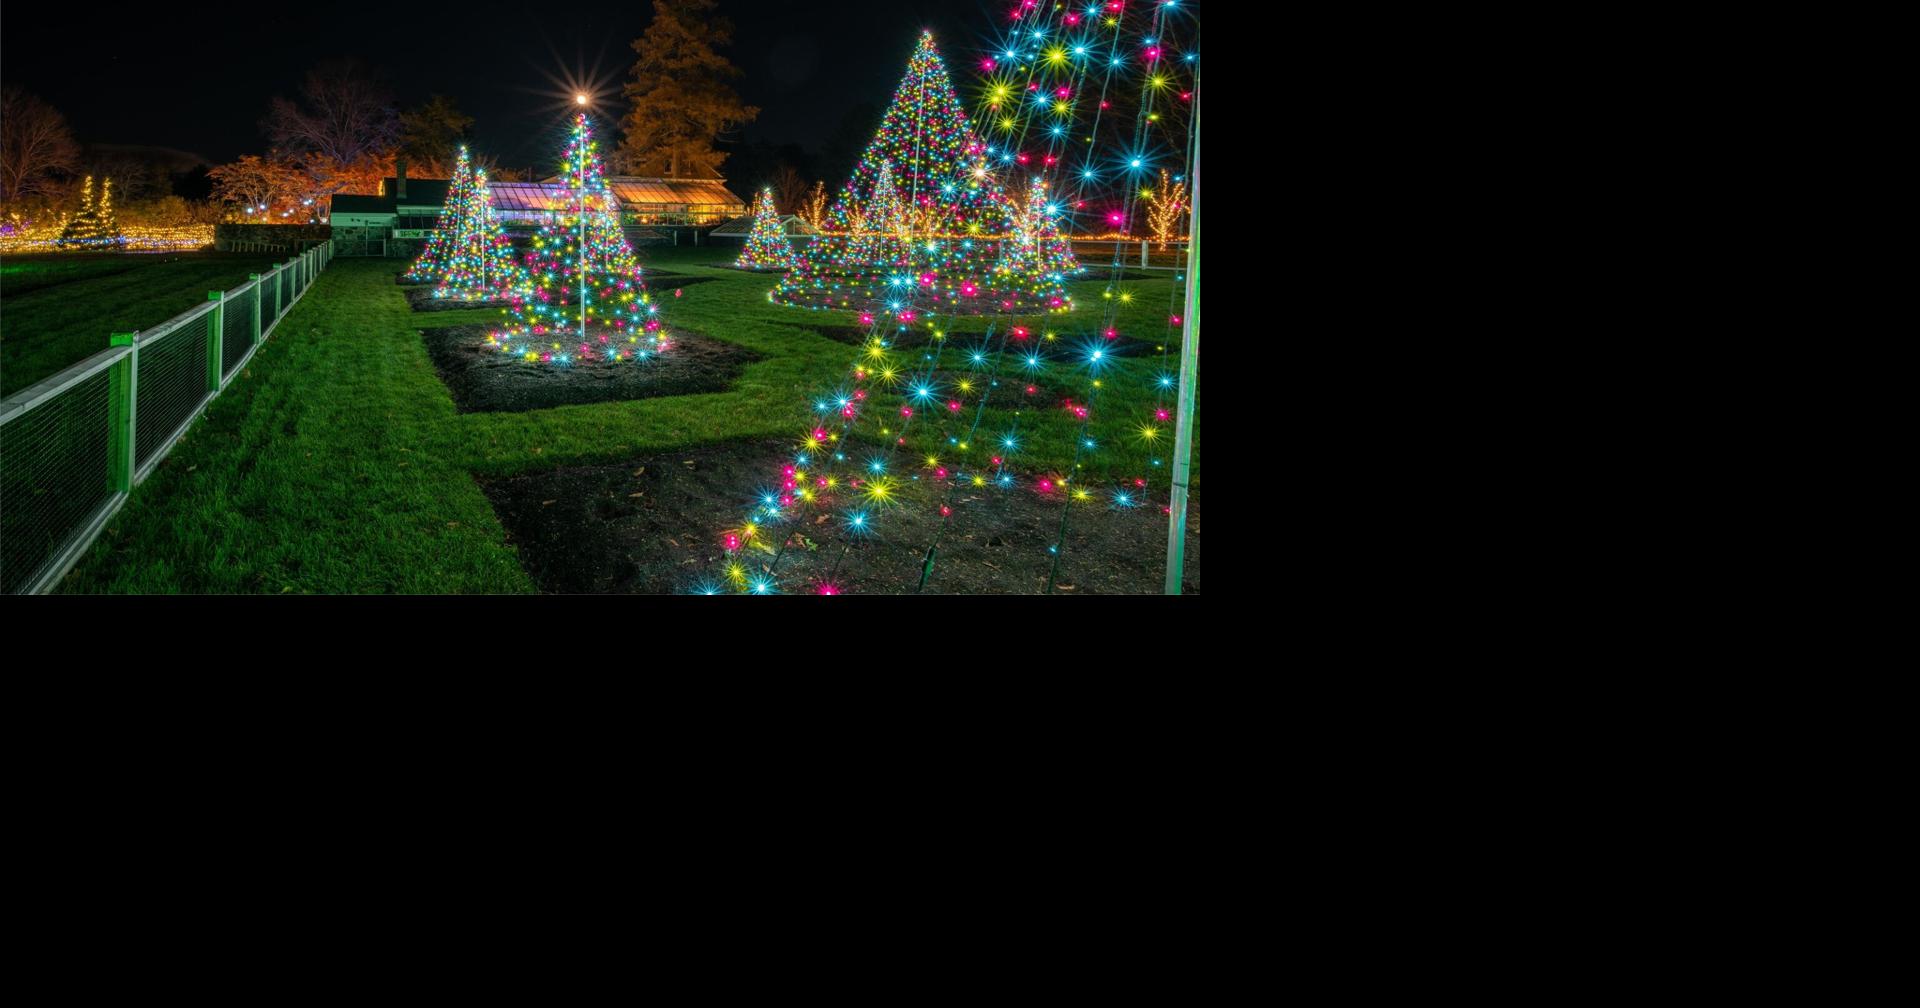 Winterlights illuminates the night Holiday display returns to Stevens